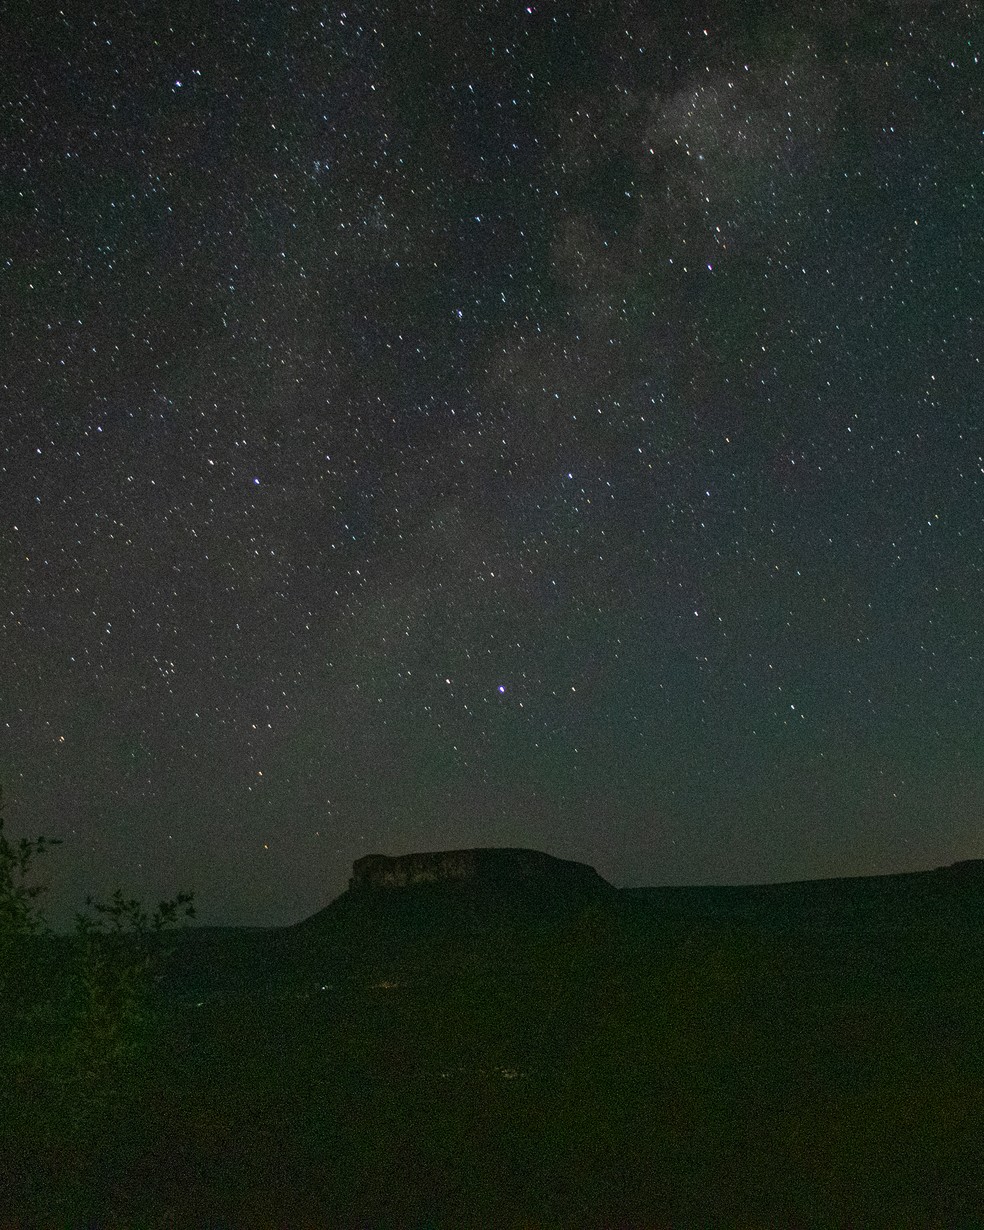 Fotógrafo faz registros de céu estrelado — Foto: Silas Ismael/Foto